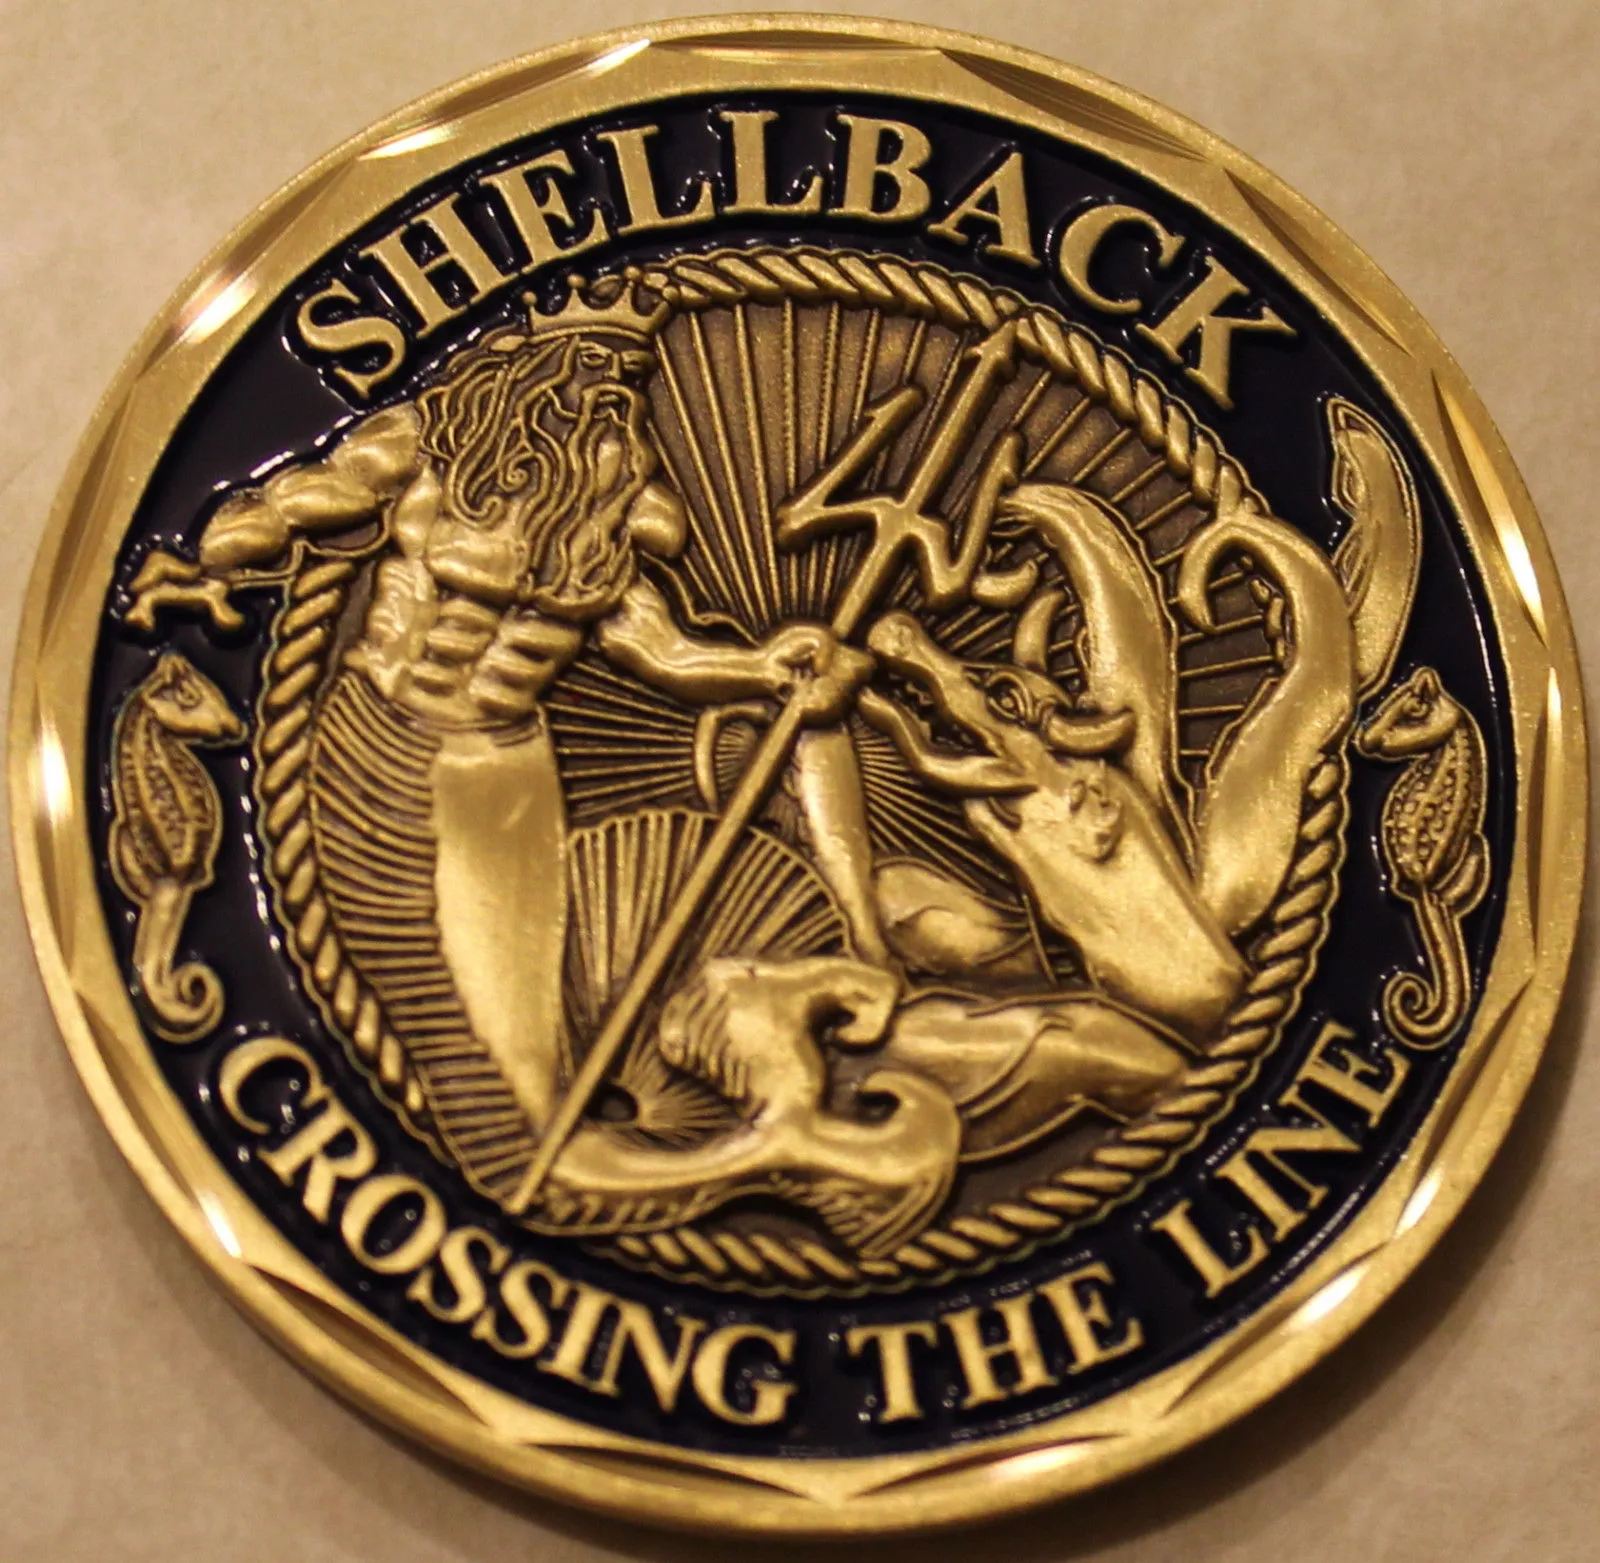 Заказ образца, монета Shellback Navy Marine Corps Challenge Coin США, военная монета вызова, военная коллекционная монета для хобби